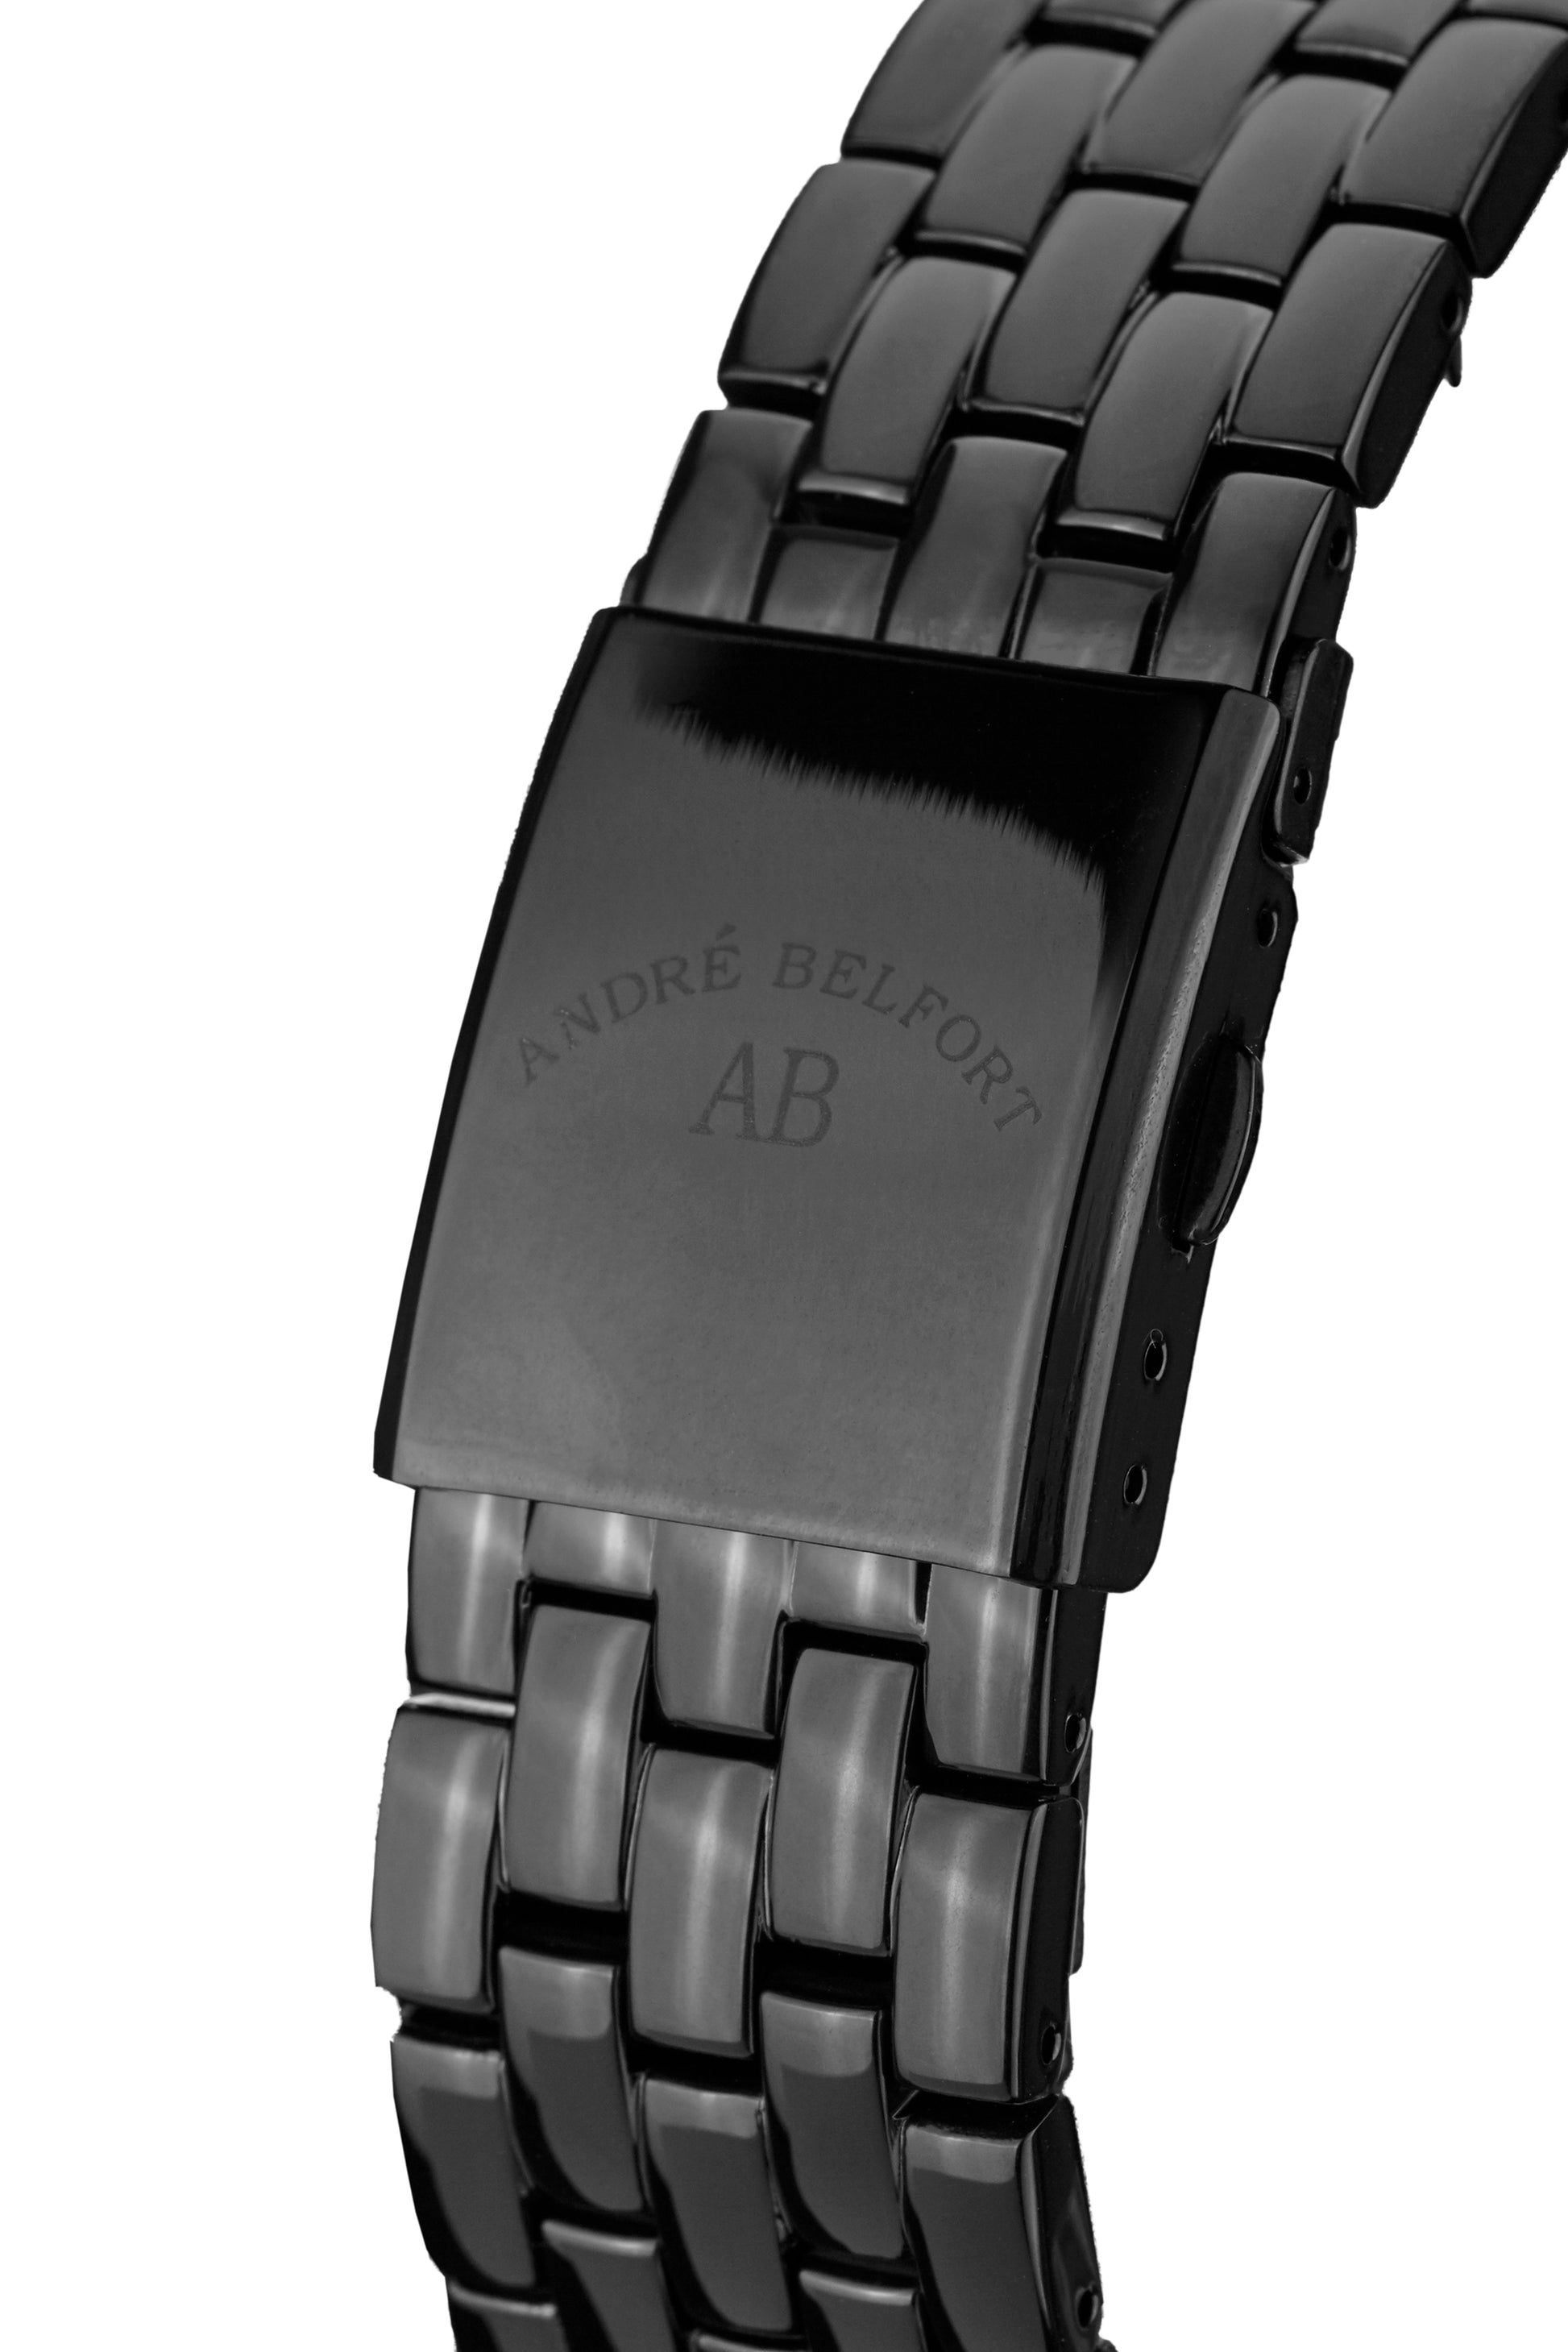 bracelet watches — steel band Étoile Polaire — Band — black